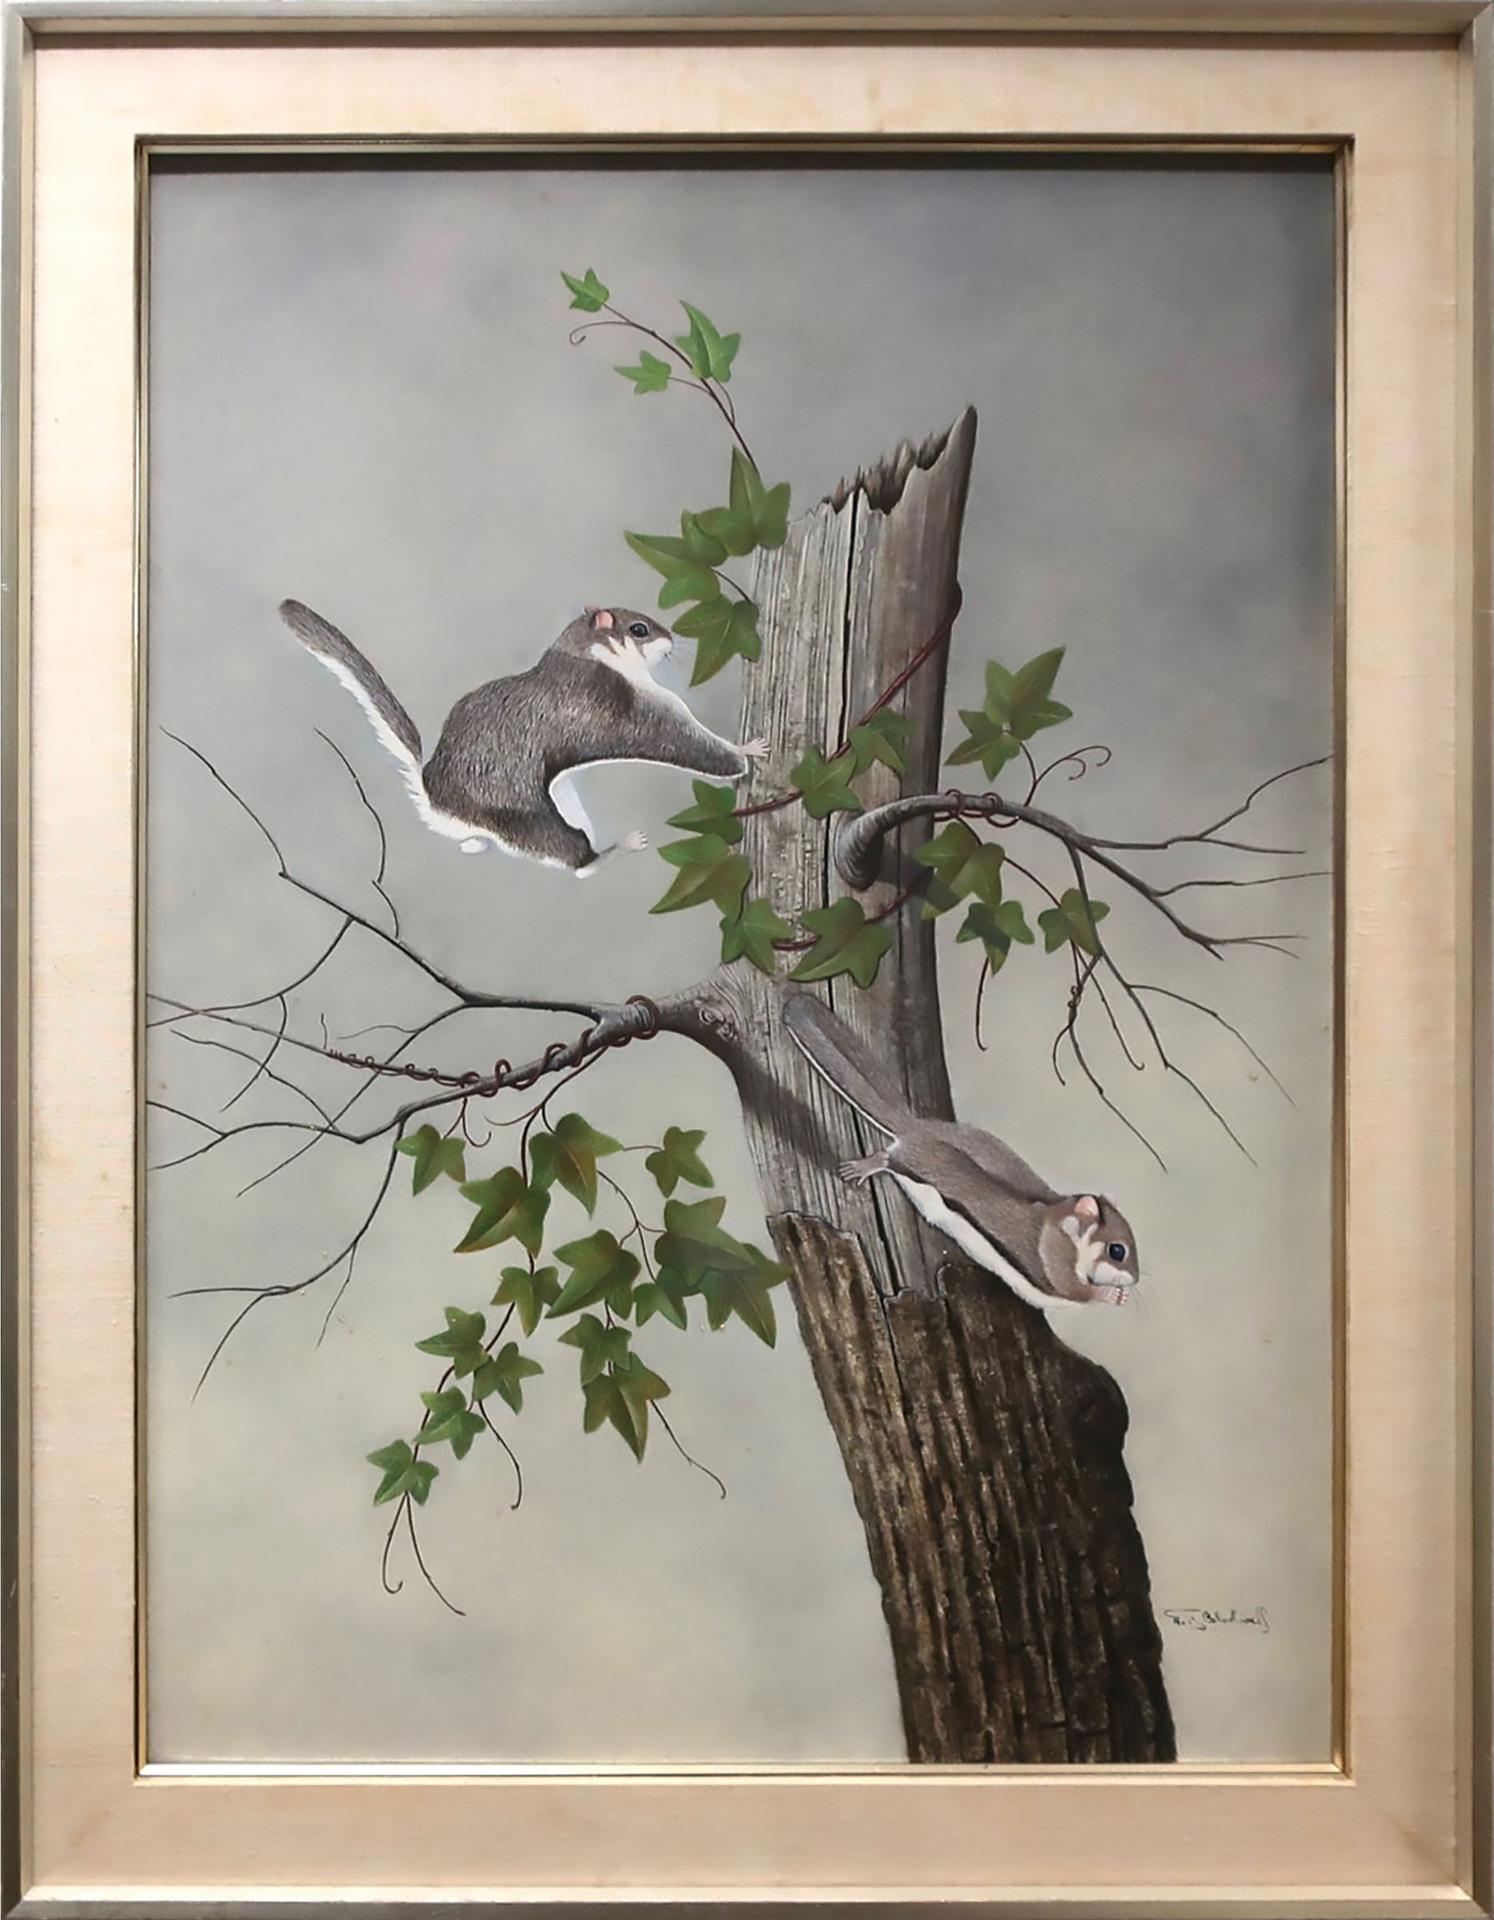 Neil Blackwell - Untitled (Flying Squirrels)